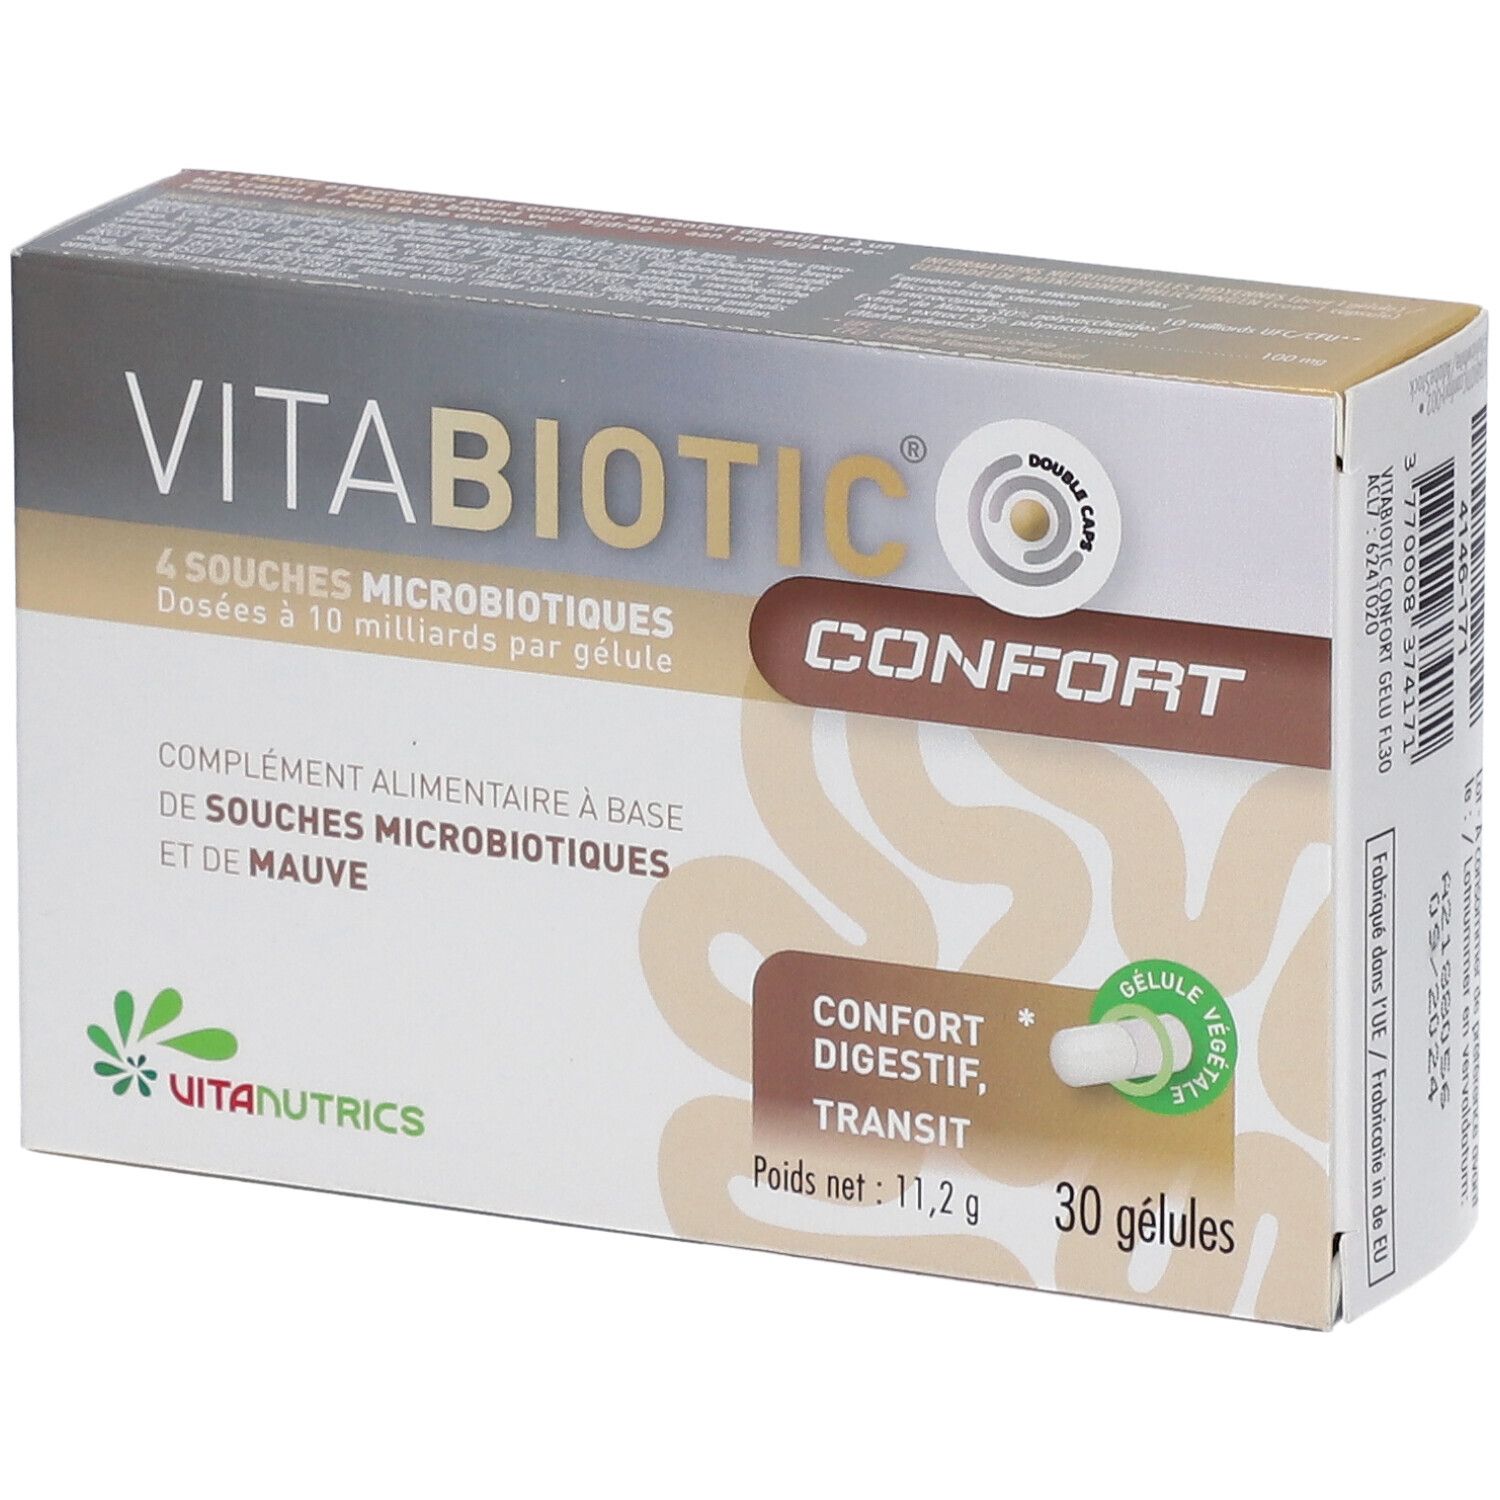 Vitanutrics Vitabiotic Confort